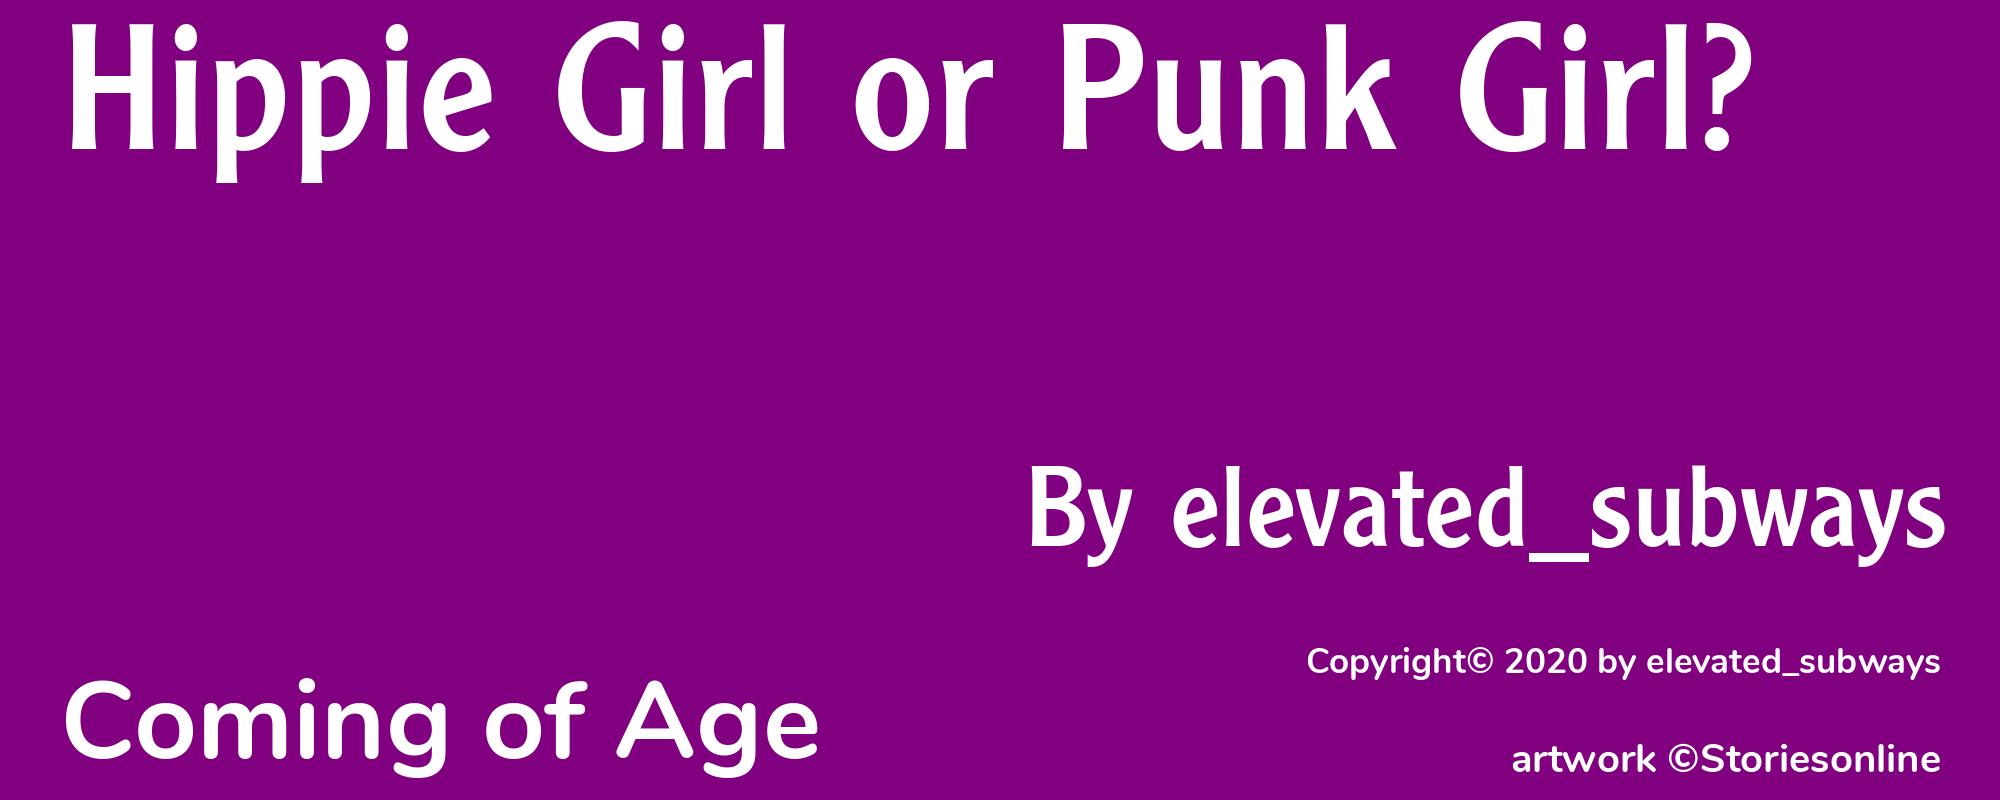 Hippie Girl or Punk Girl? - Cover